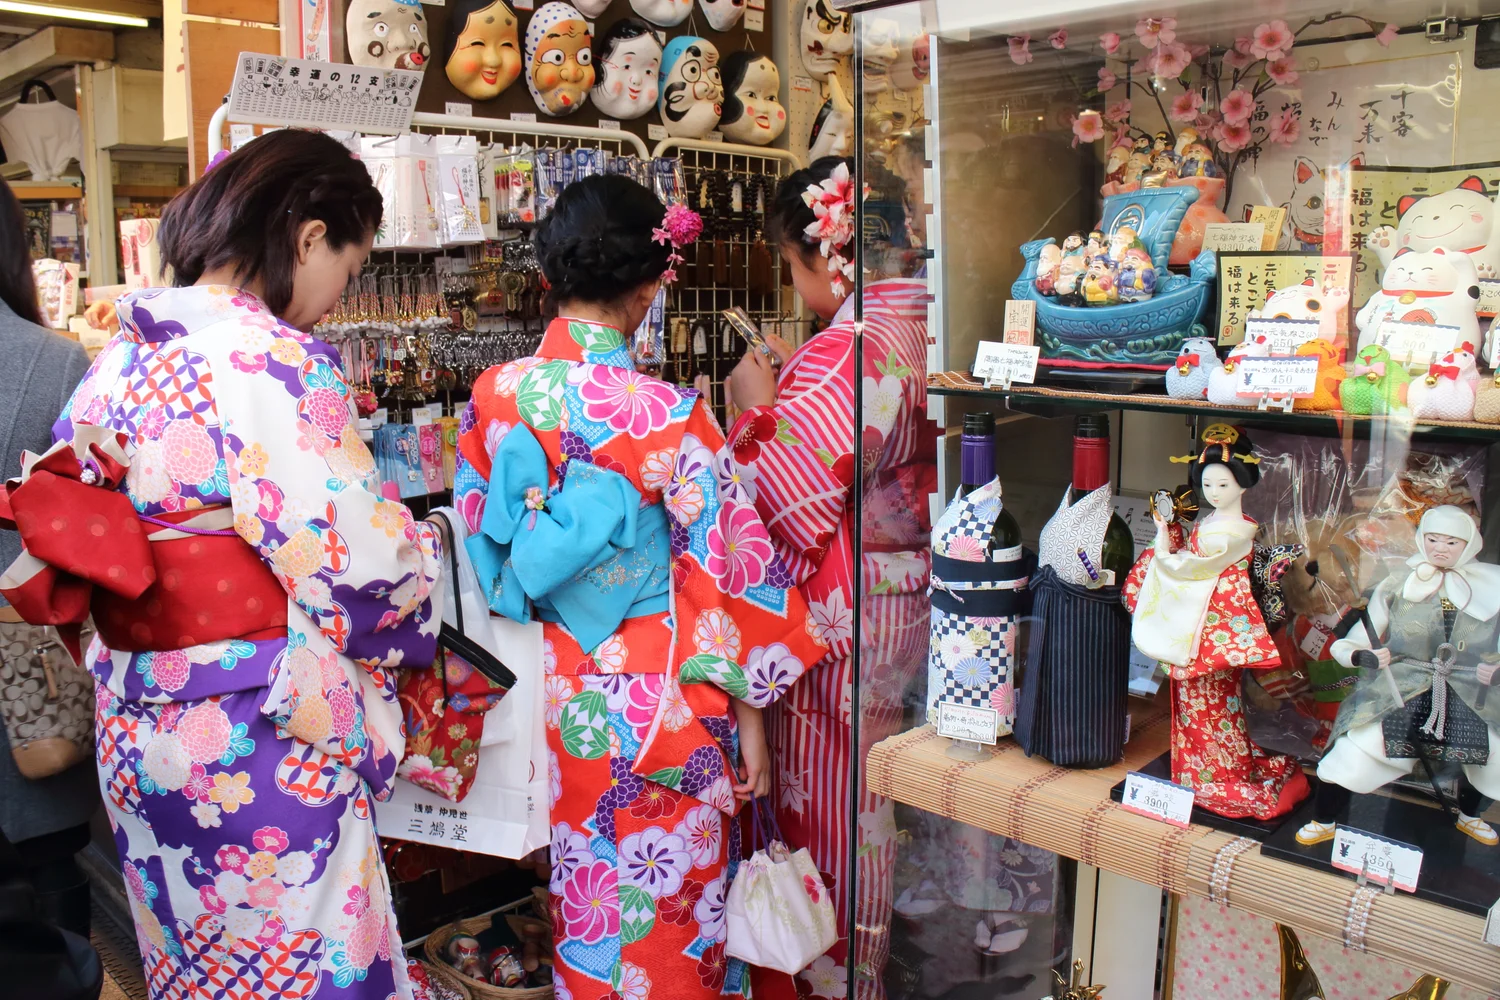 Ladies enjoy shopping in kimonos at Asakusa street.